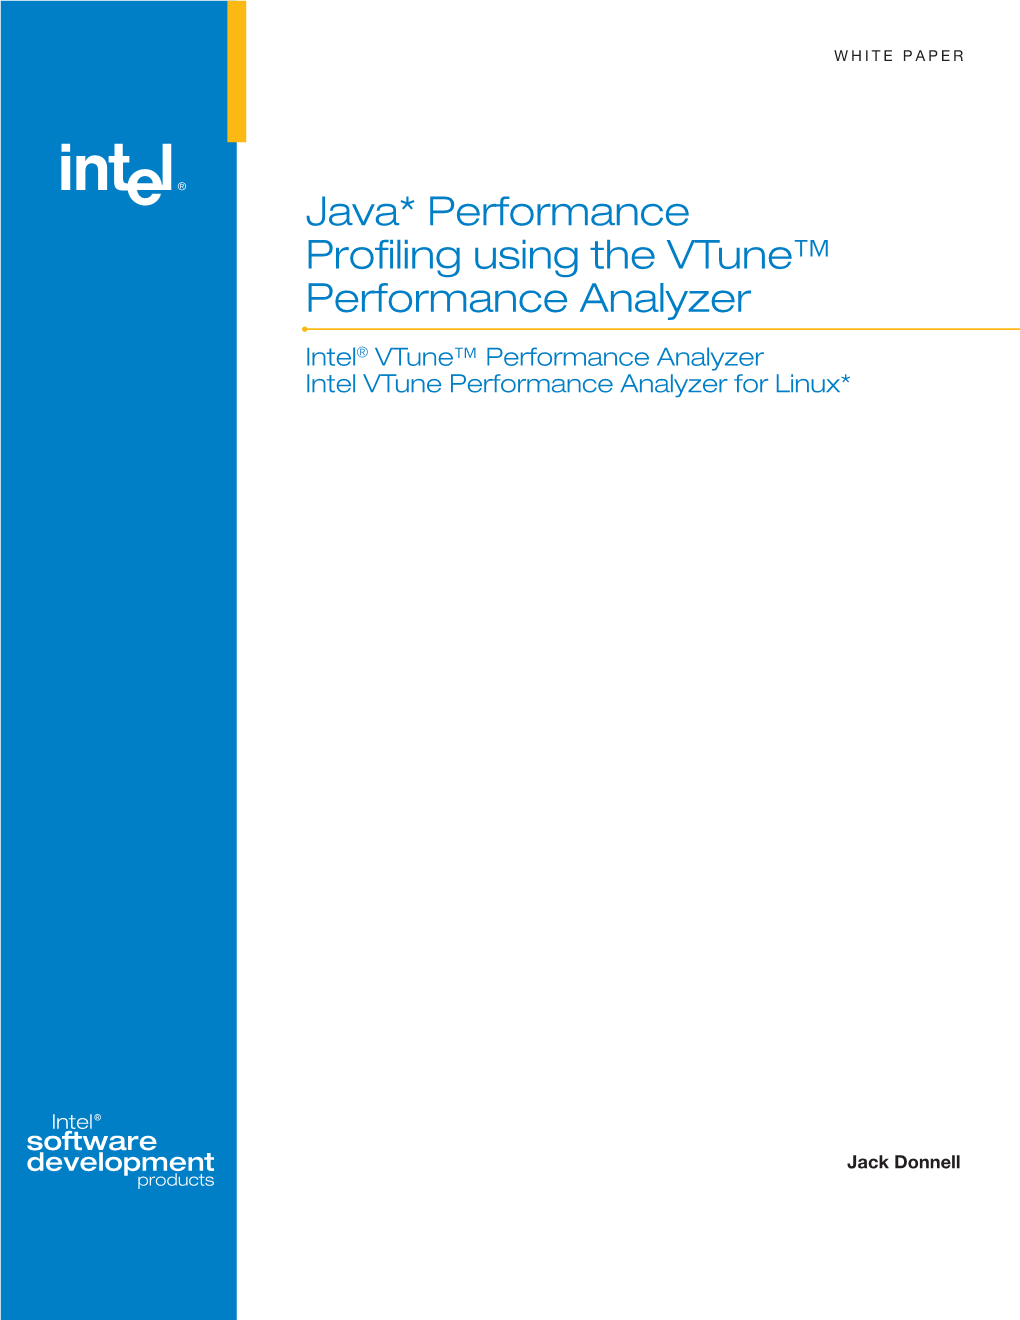 Java* Performance Profiling Using the Vtune™ Performance Analyzer